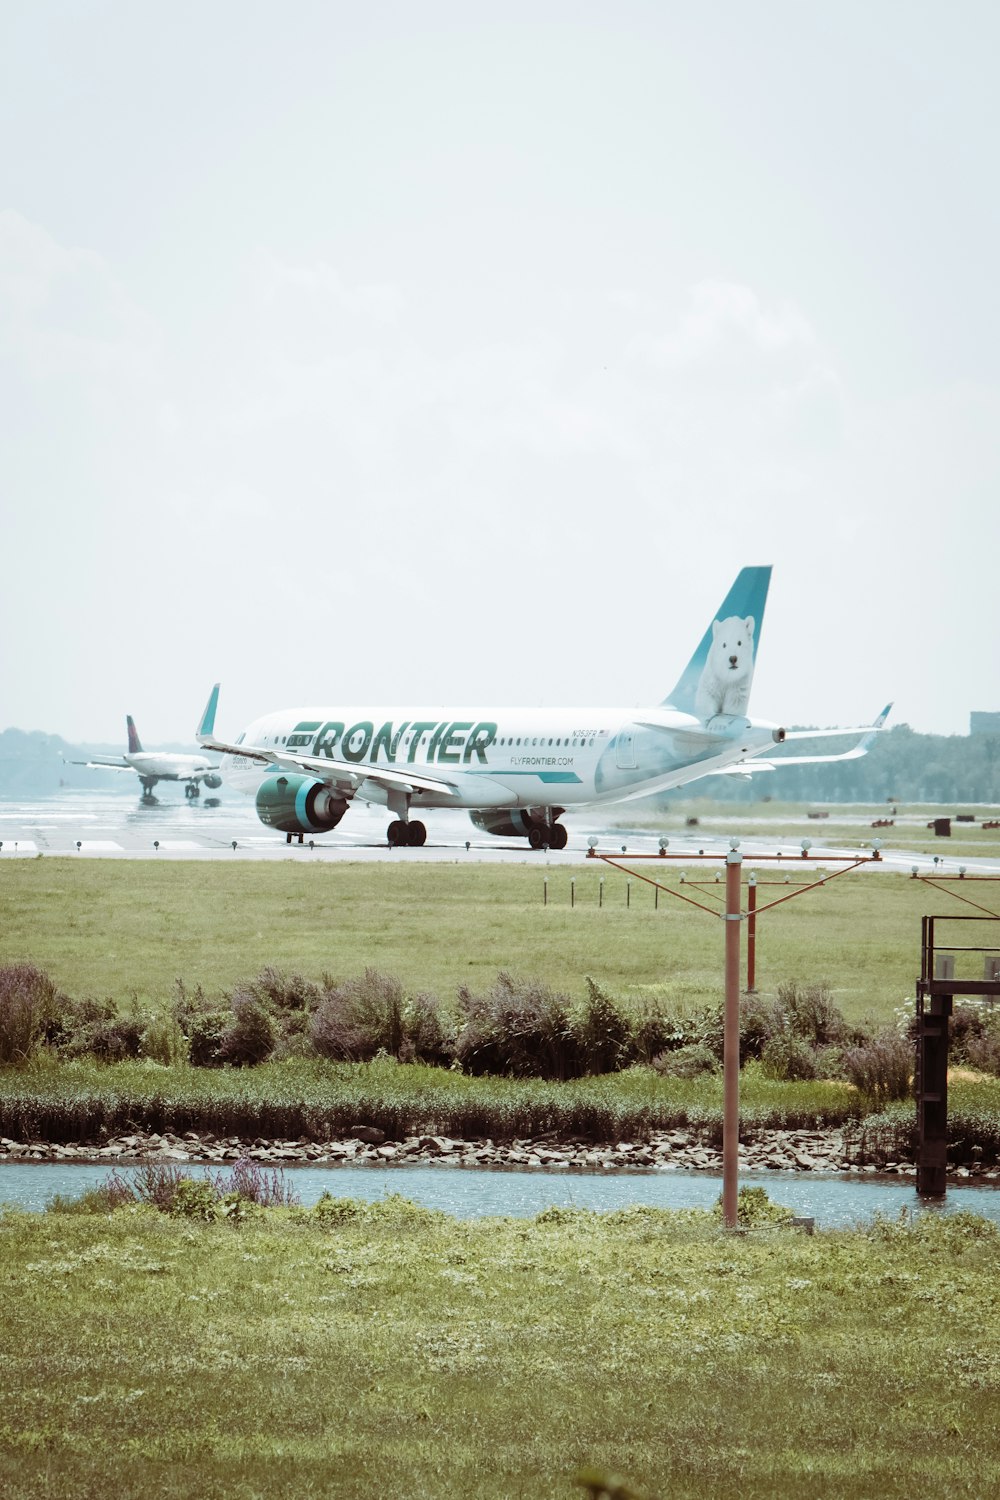 Weißes Passagierflugzeug tagsüber auf grünem Rasenfeld